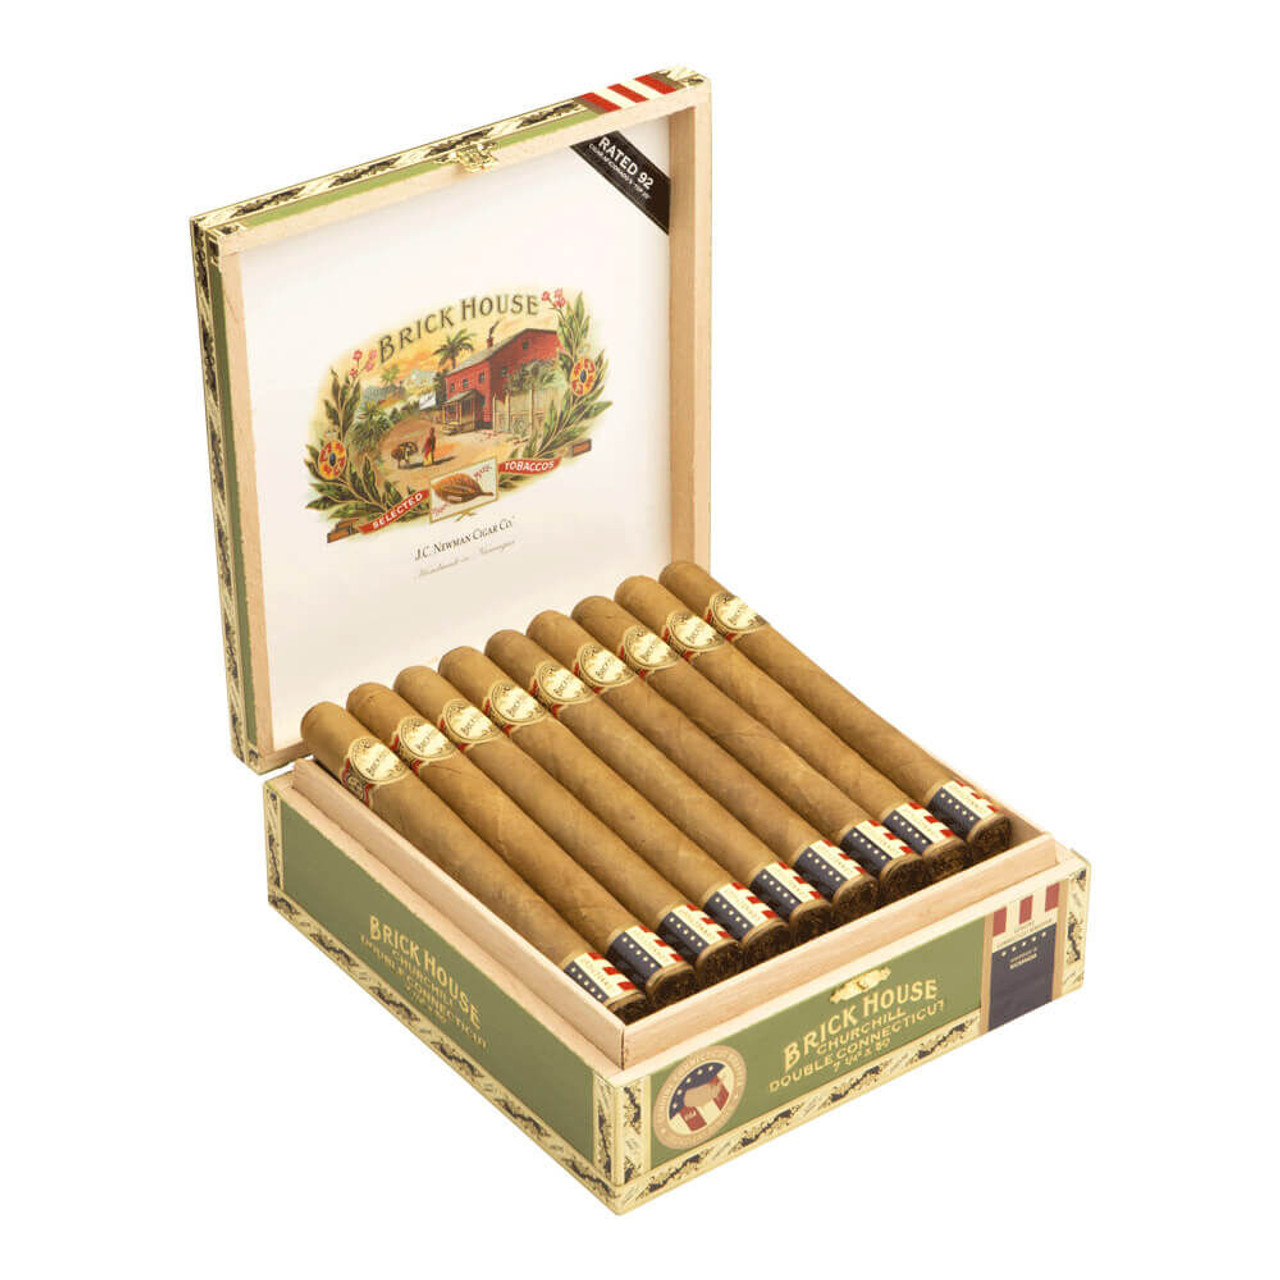 Brick House Double Connecticut Churchill Cigars - 7.25 x 50 (Box of 25) Open